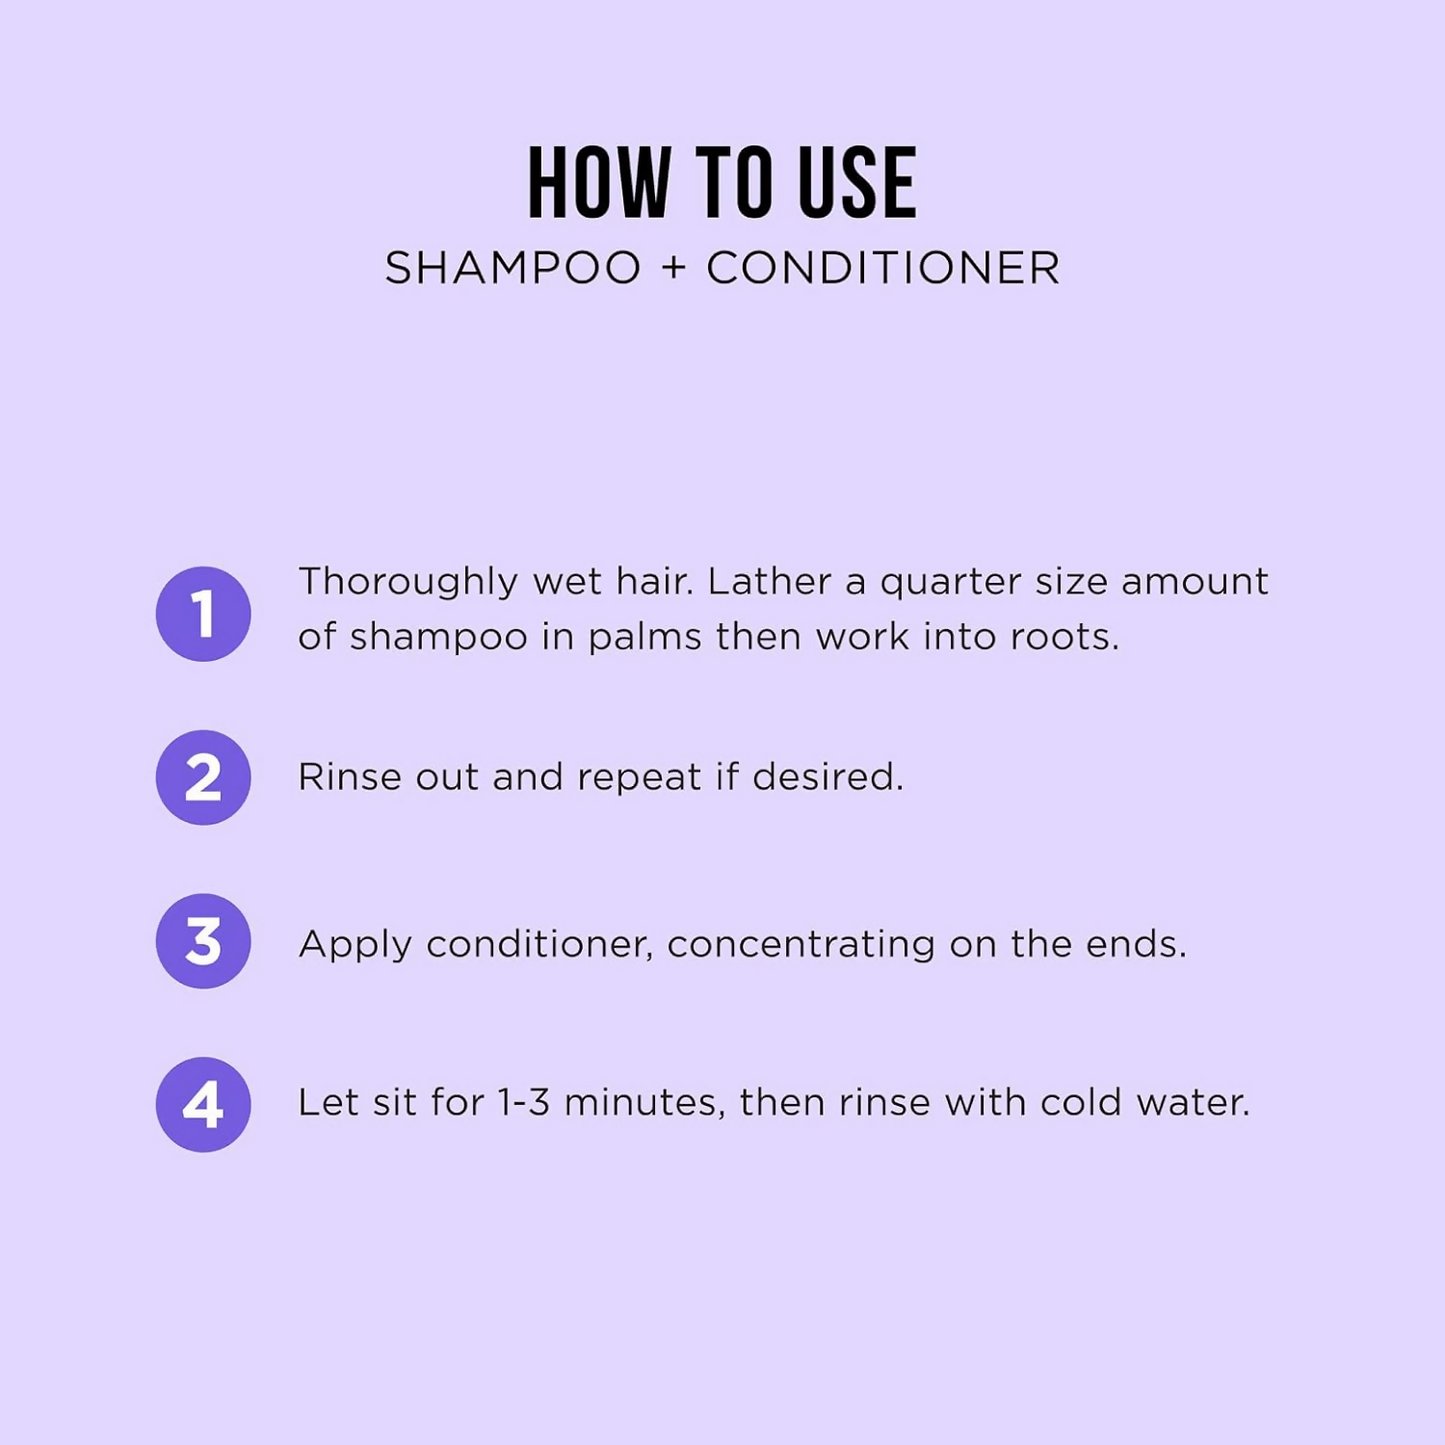 HASK Biotin Boost Thickening Shampoo & Conditioner